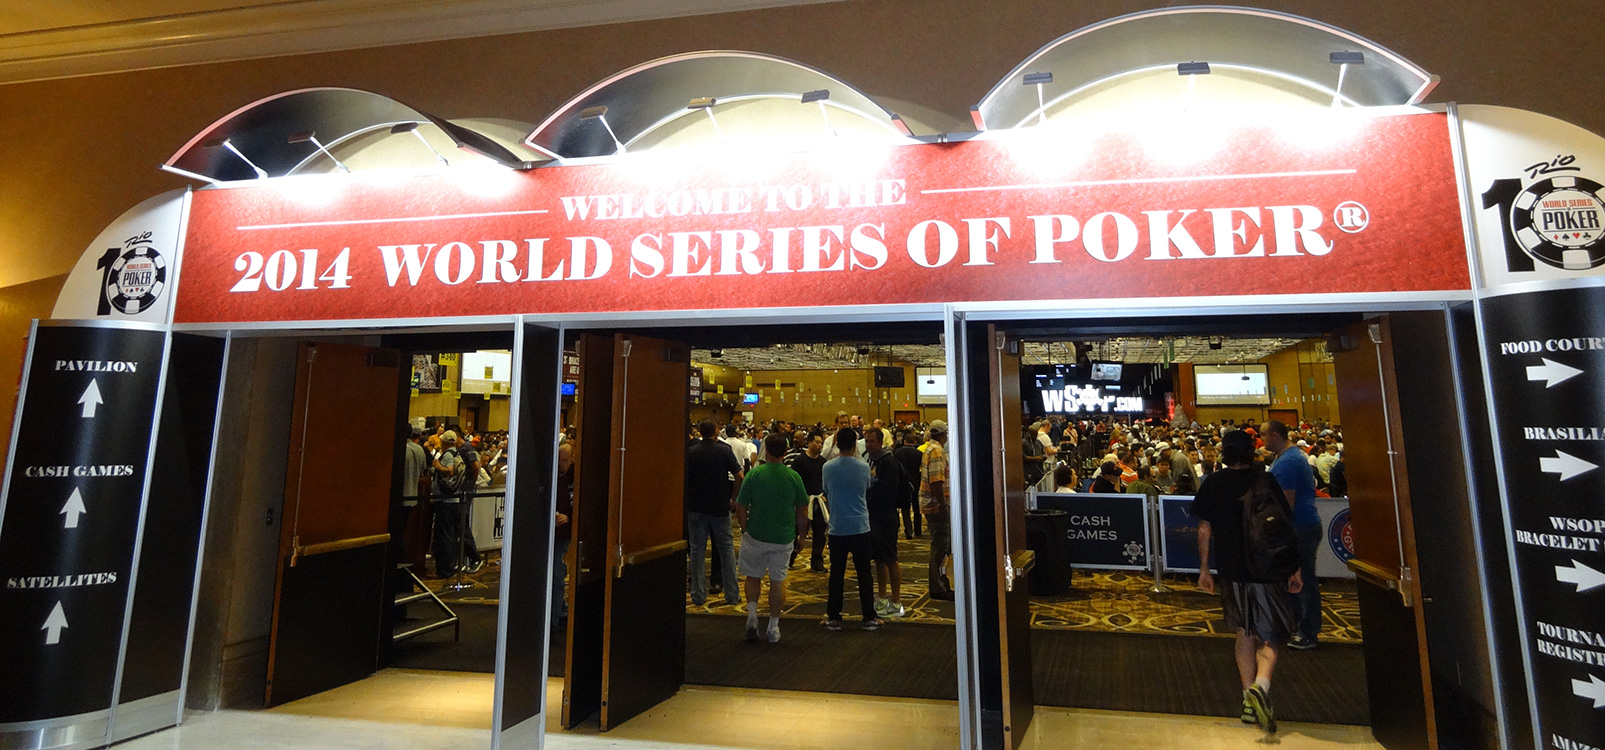 Entrance to World Series of Poker Main Room, WSOP 2014 Vegas